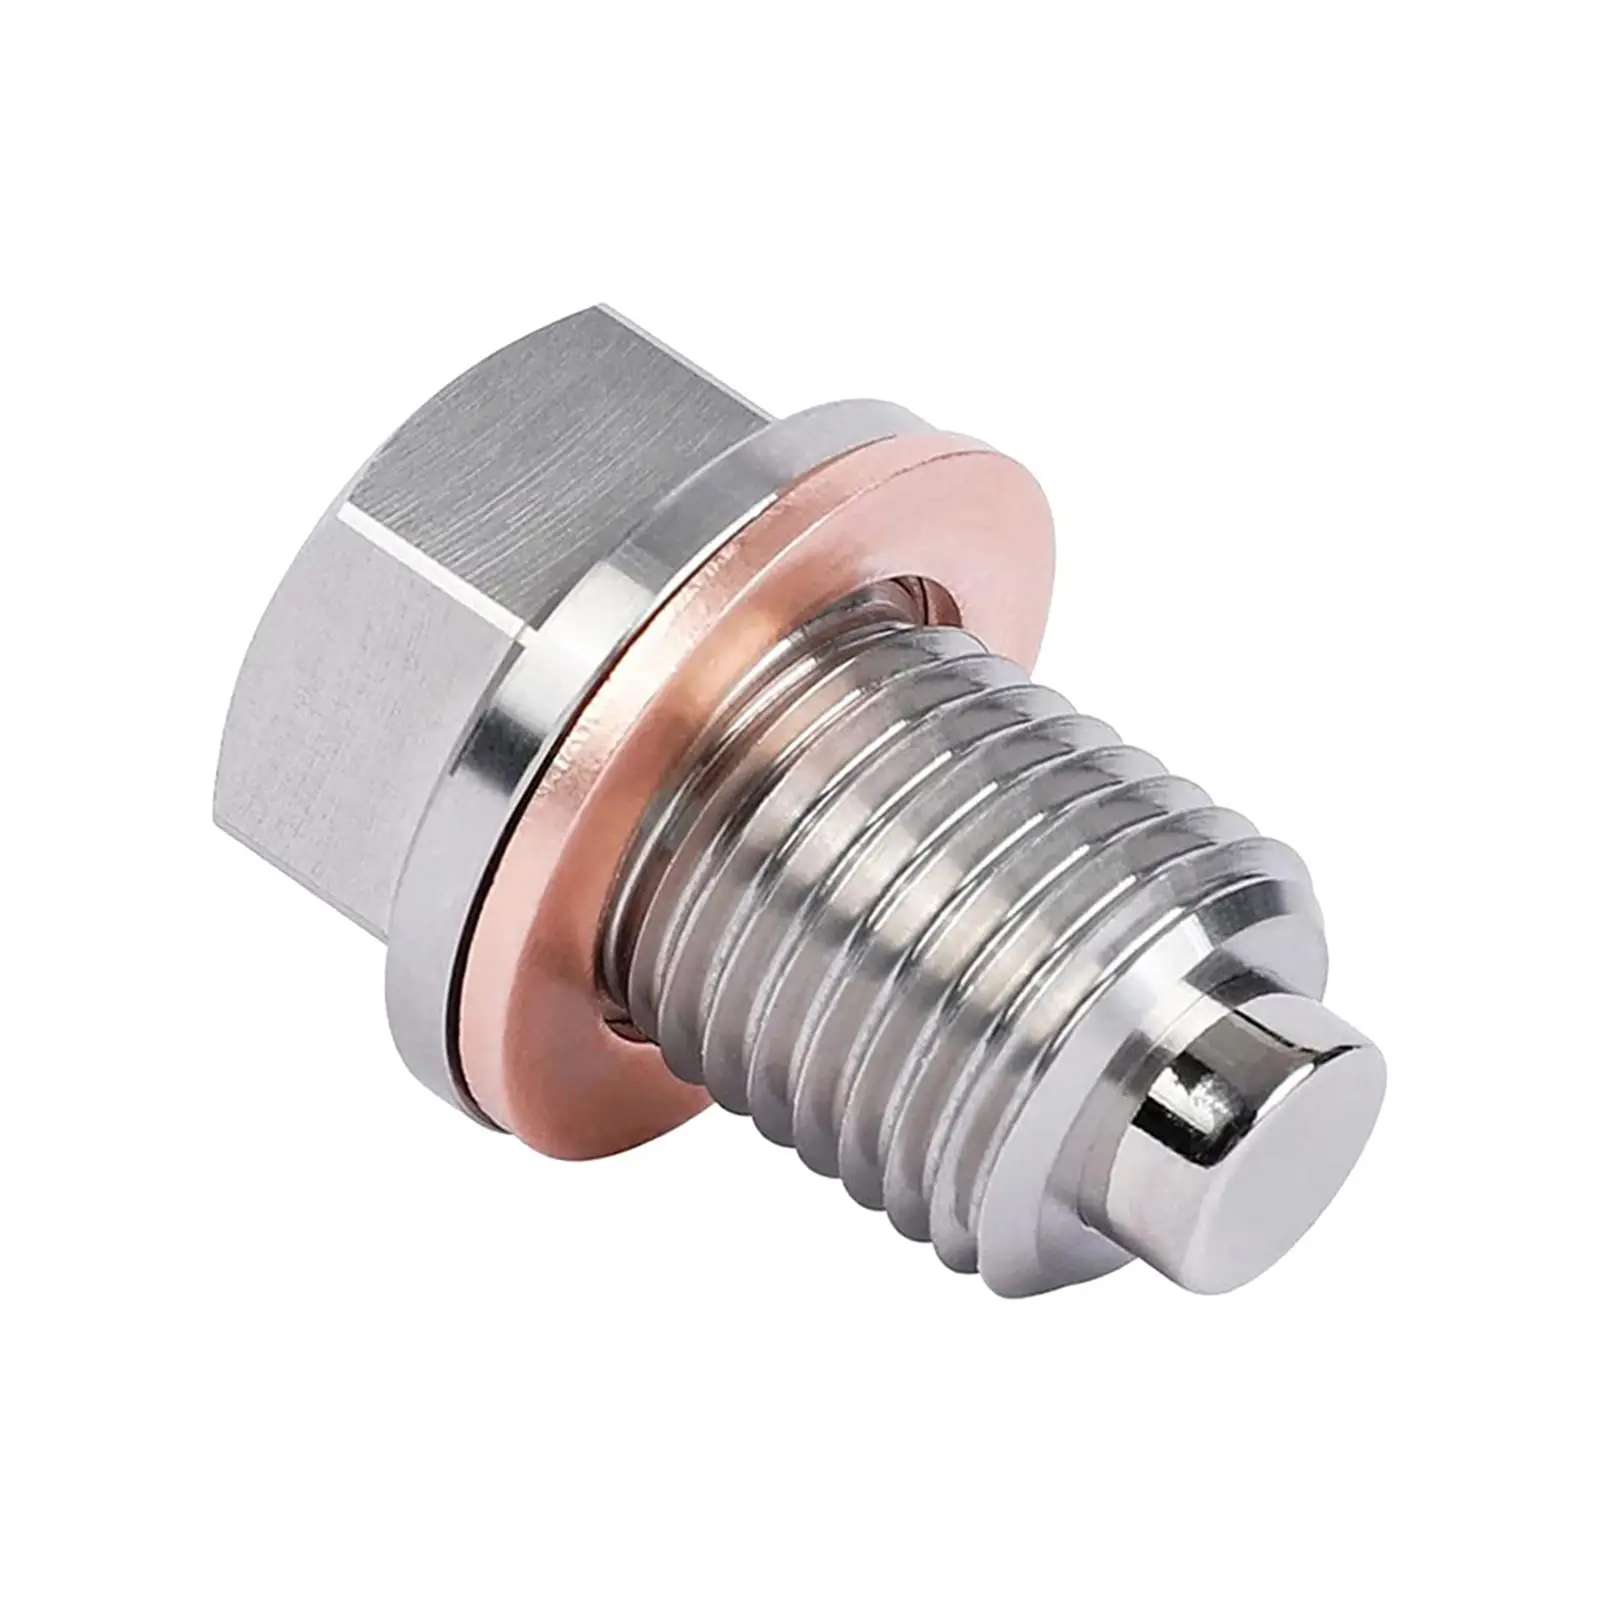 Oil Pan Drain Plug M12x1.5 Anti Leak Easy to Install Anti Vibration Sump Drain Nut Neodymium Magnet Bolt for Motorcycle Car